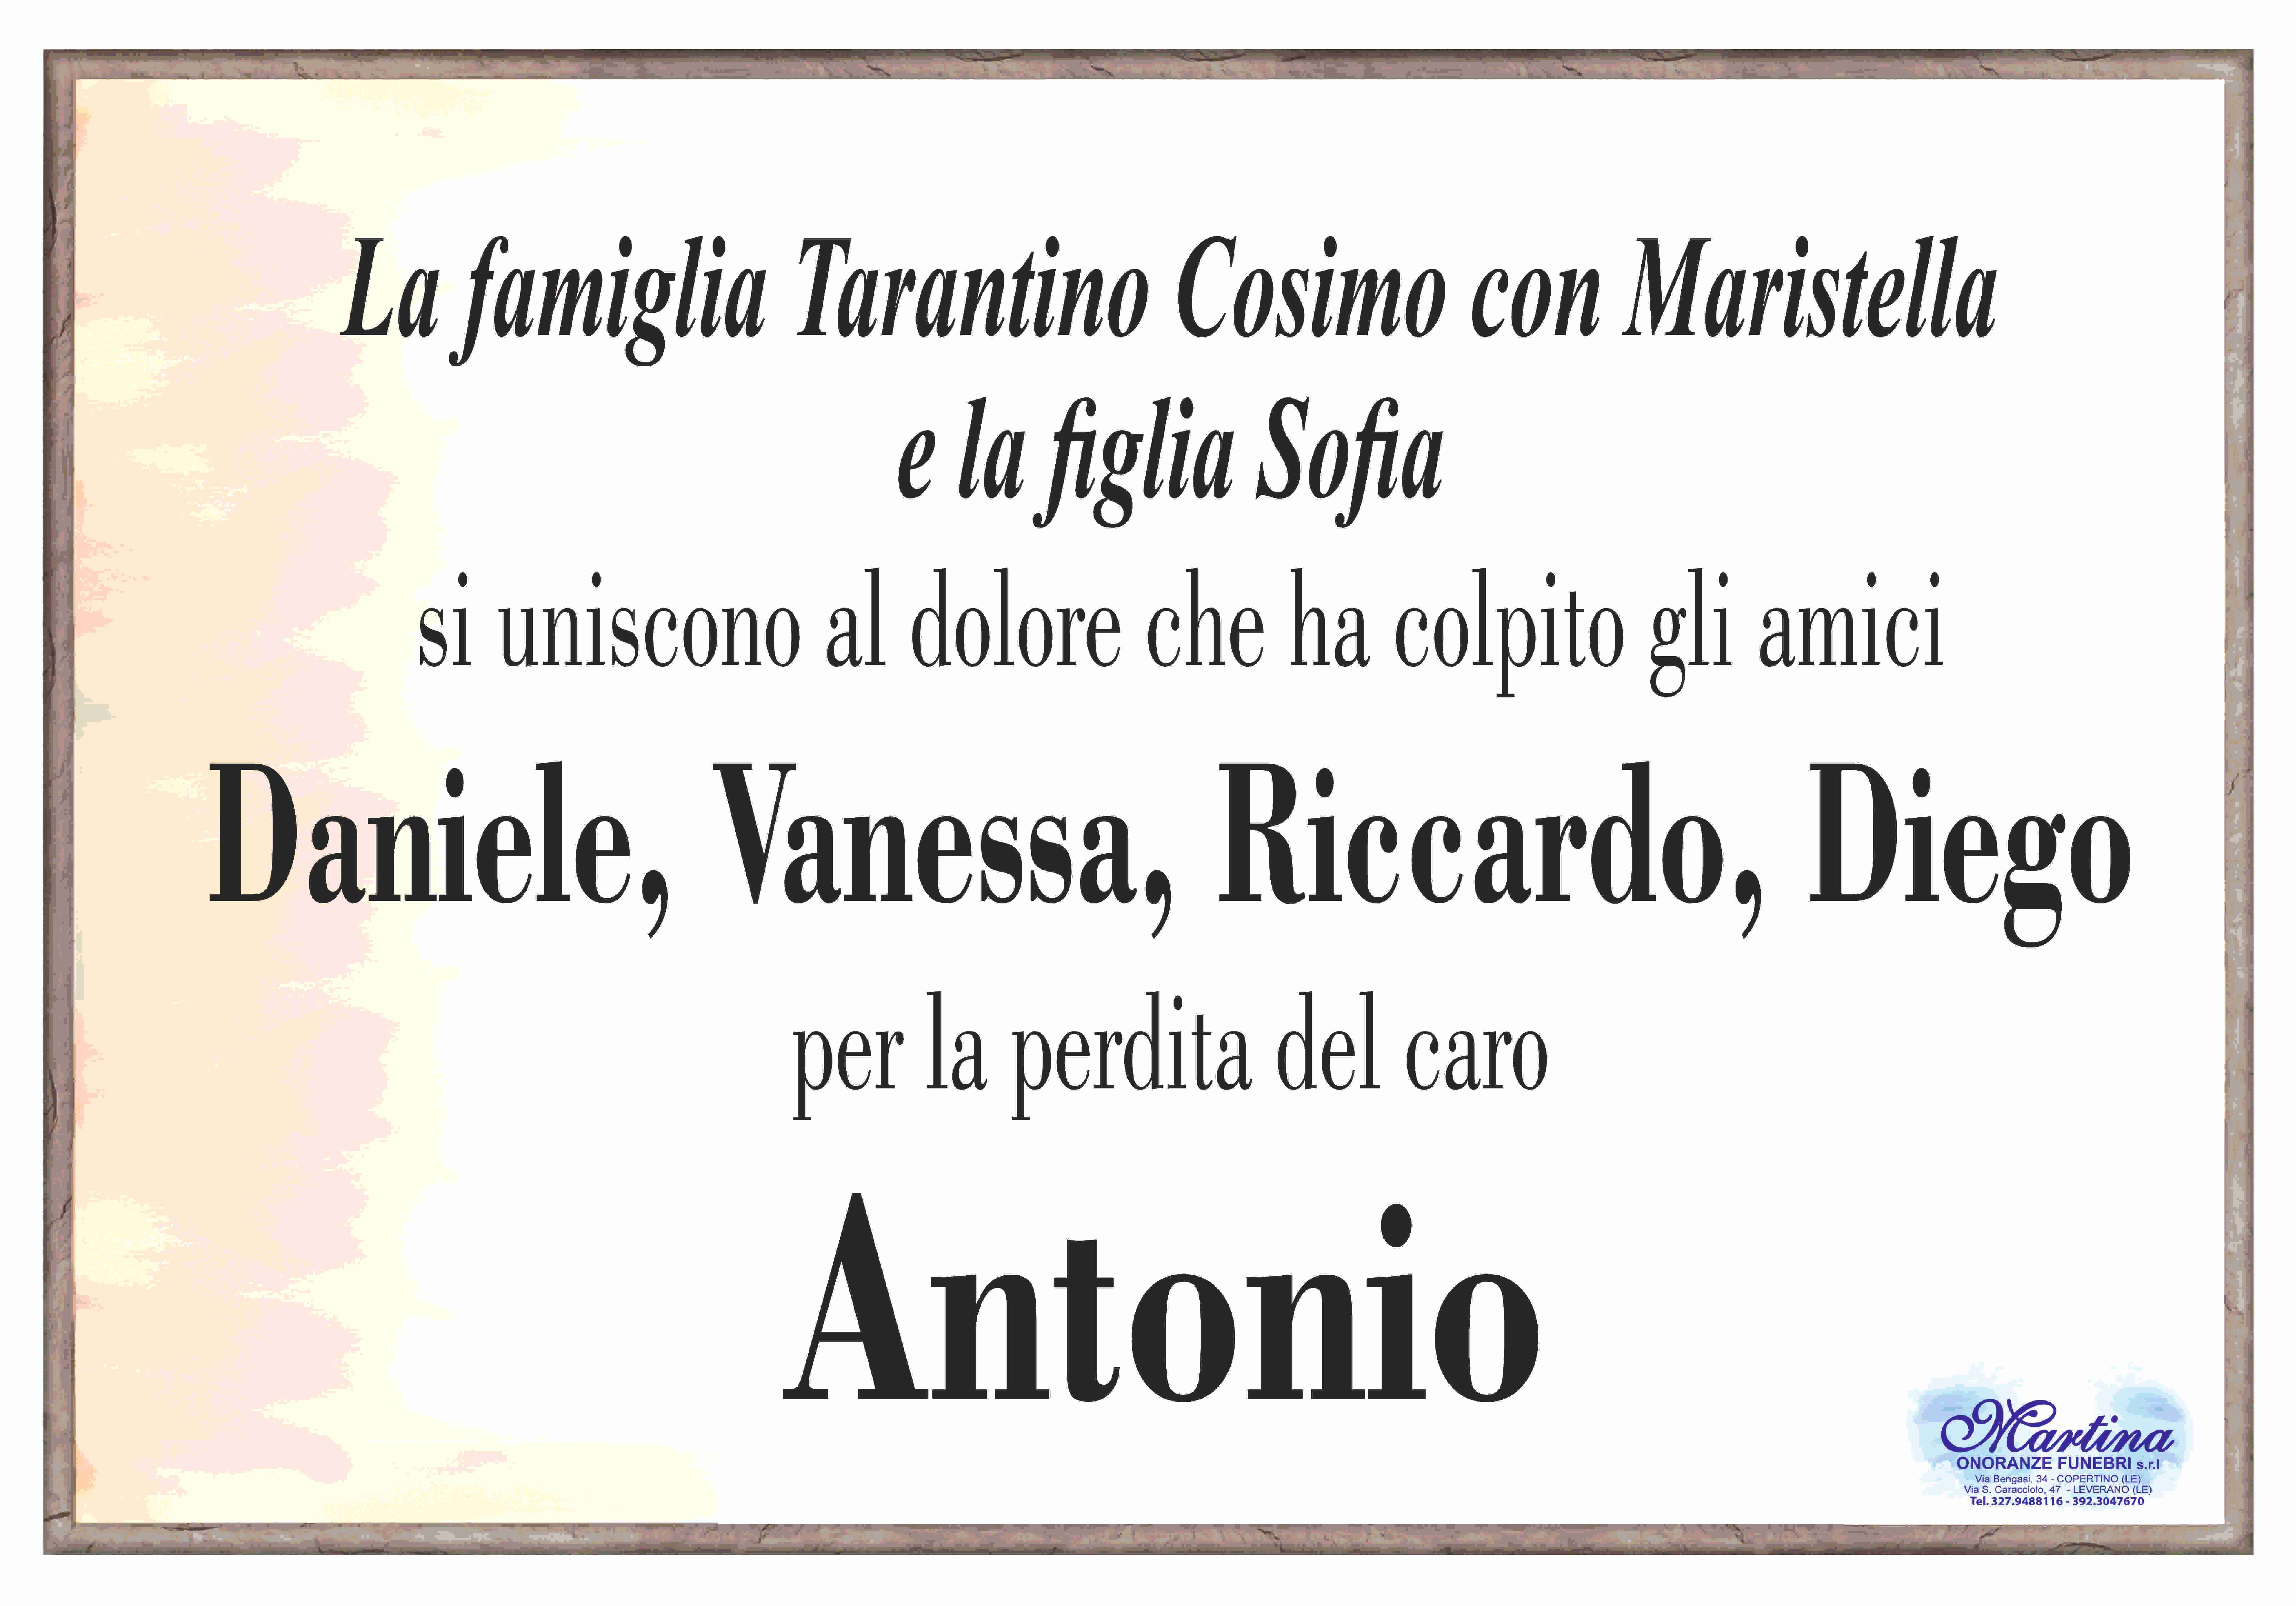 Antonio Mancarella